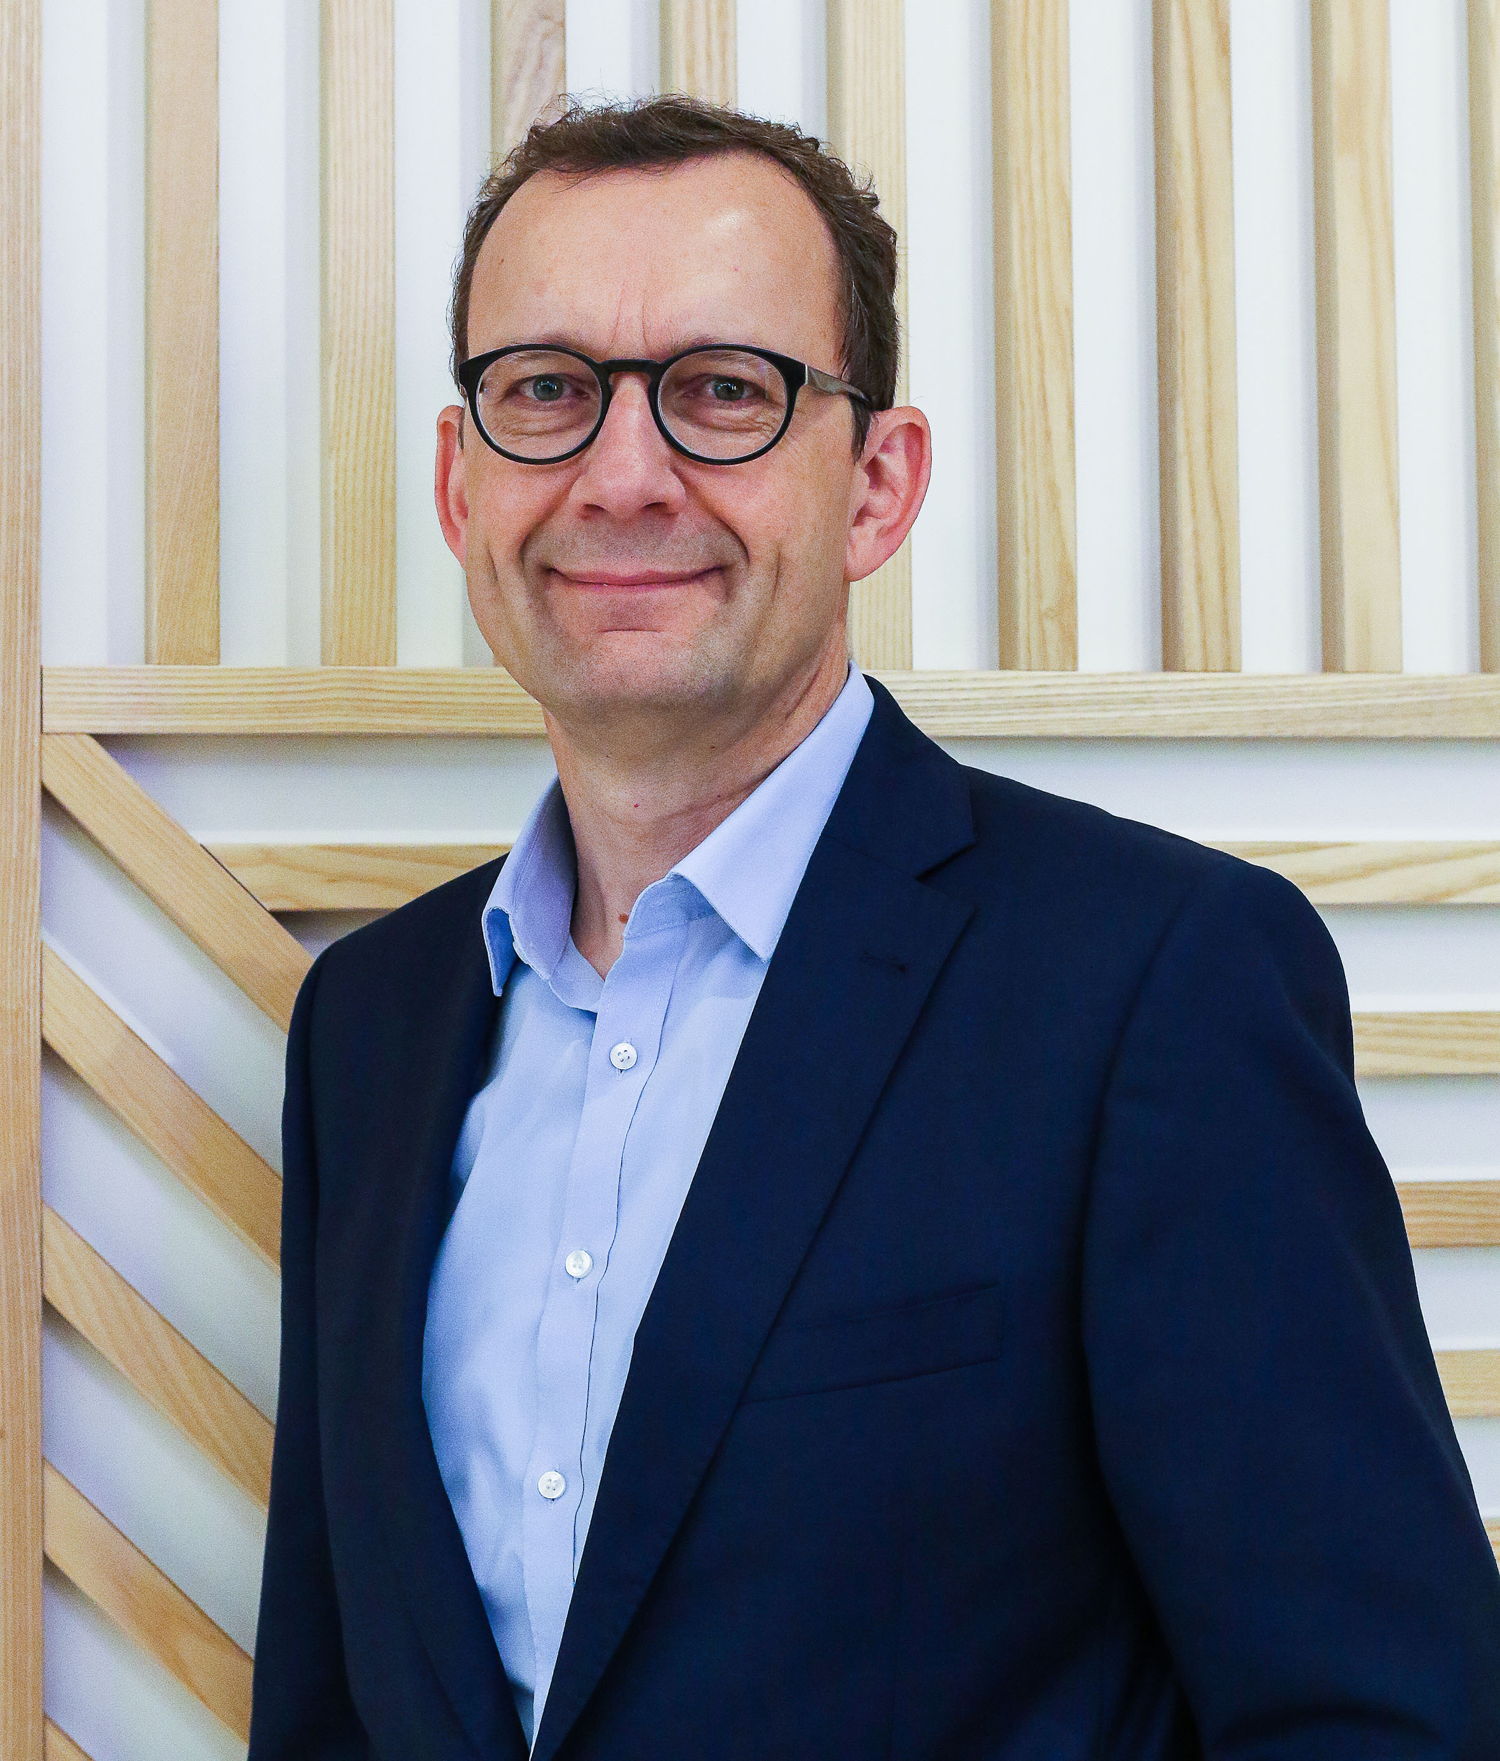 DKV Euro Service heeft Peter Meier per 2 januari 2020 benoemd tot nieuwe Chief Financial Officer (CFO). (foto DKV)